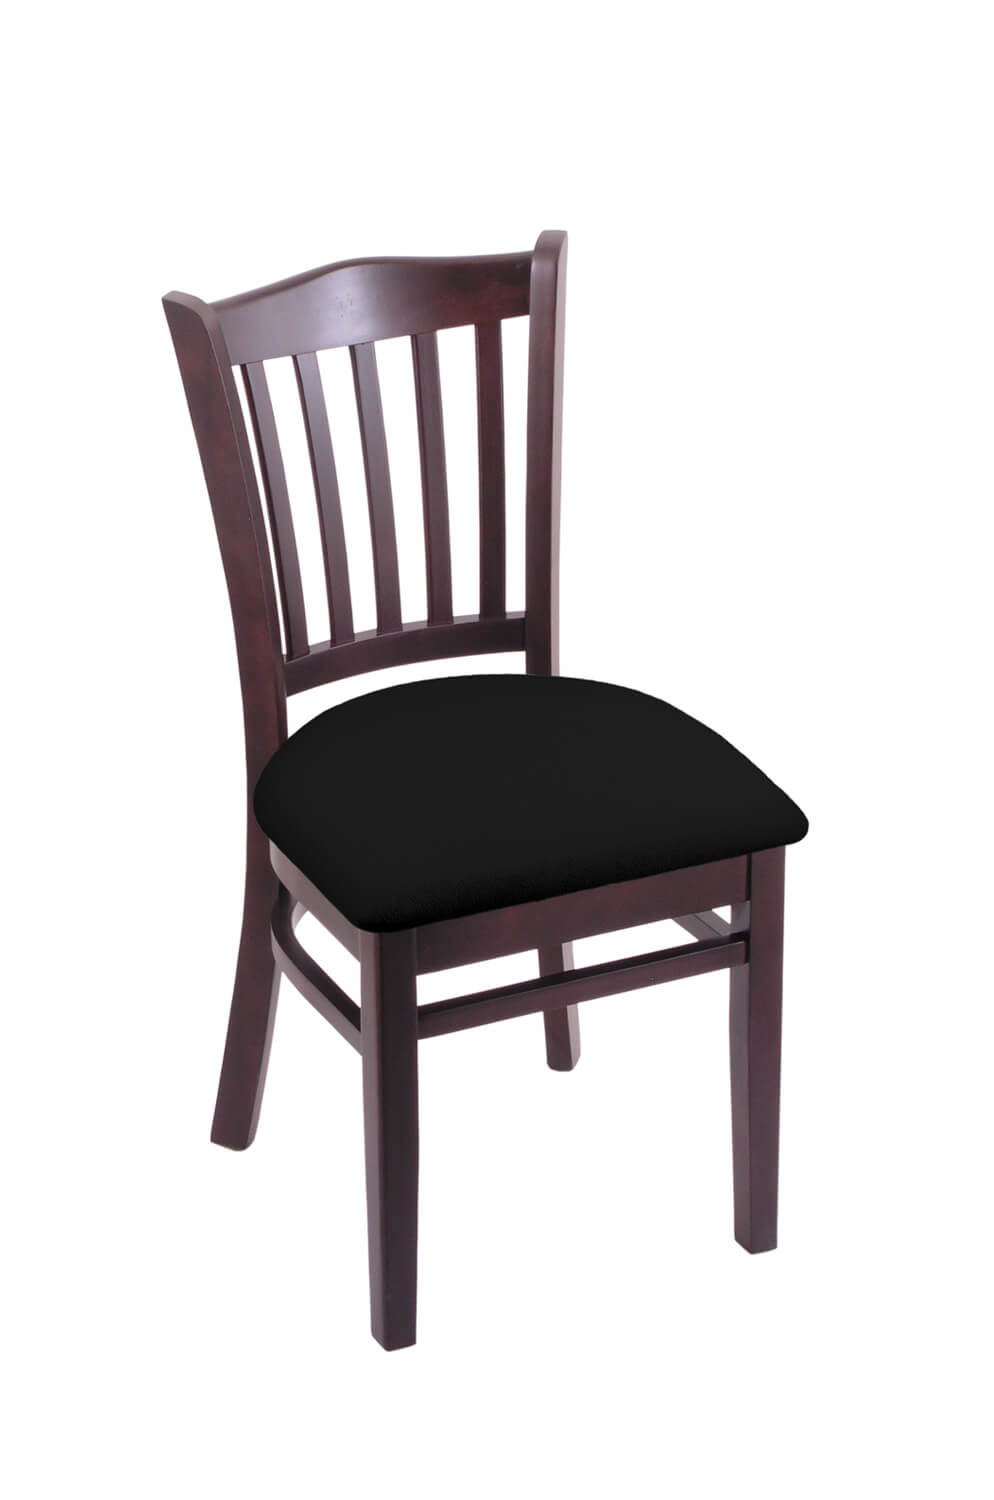 https://barstoolcomforts.com/wp-content/uploads/2021/03/holland-3120-dark-cherry-wood-dining-chair-in-black-vinyl-seat-cushion.jpg